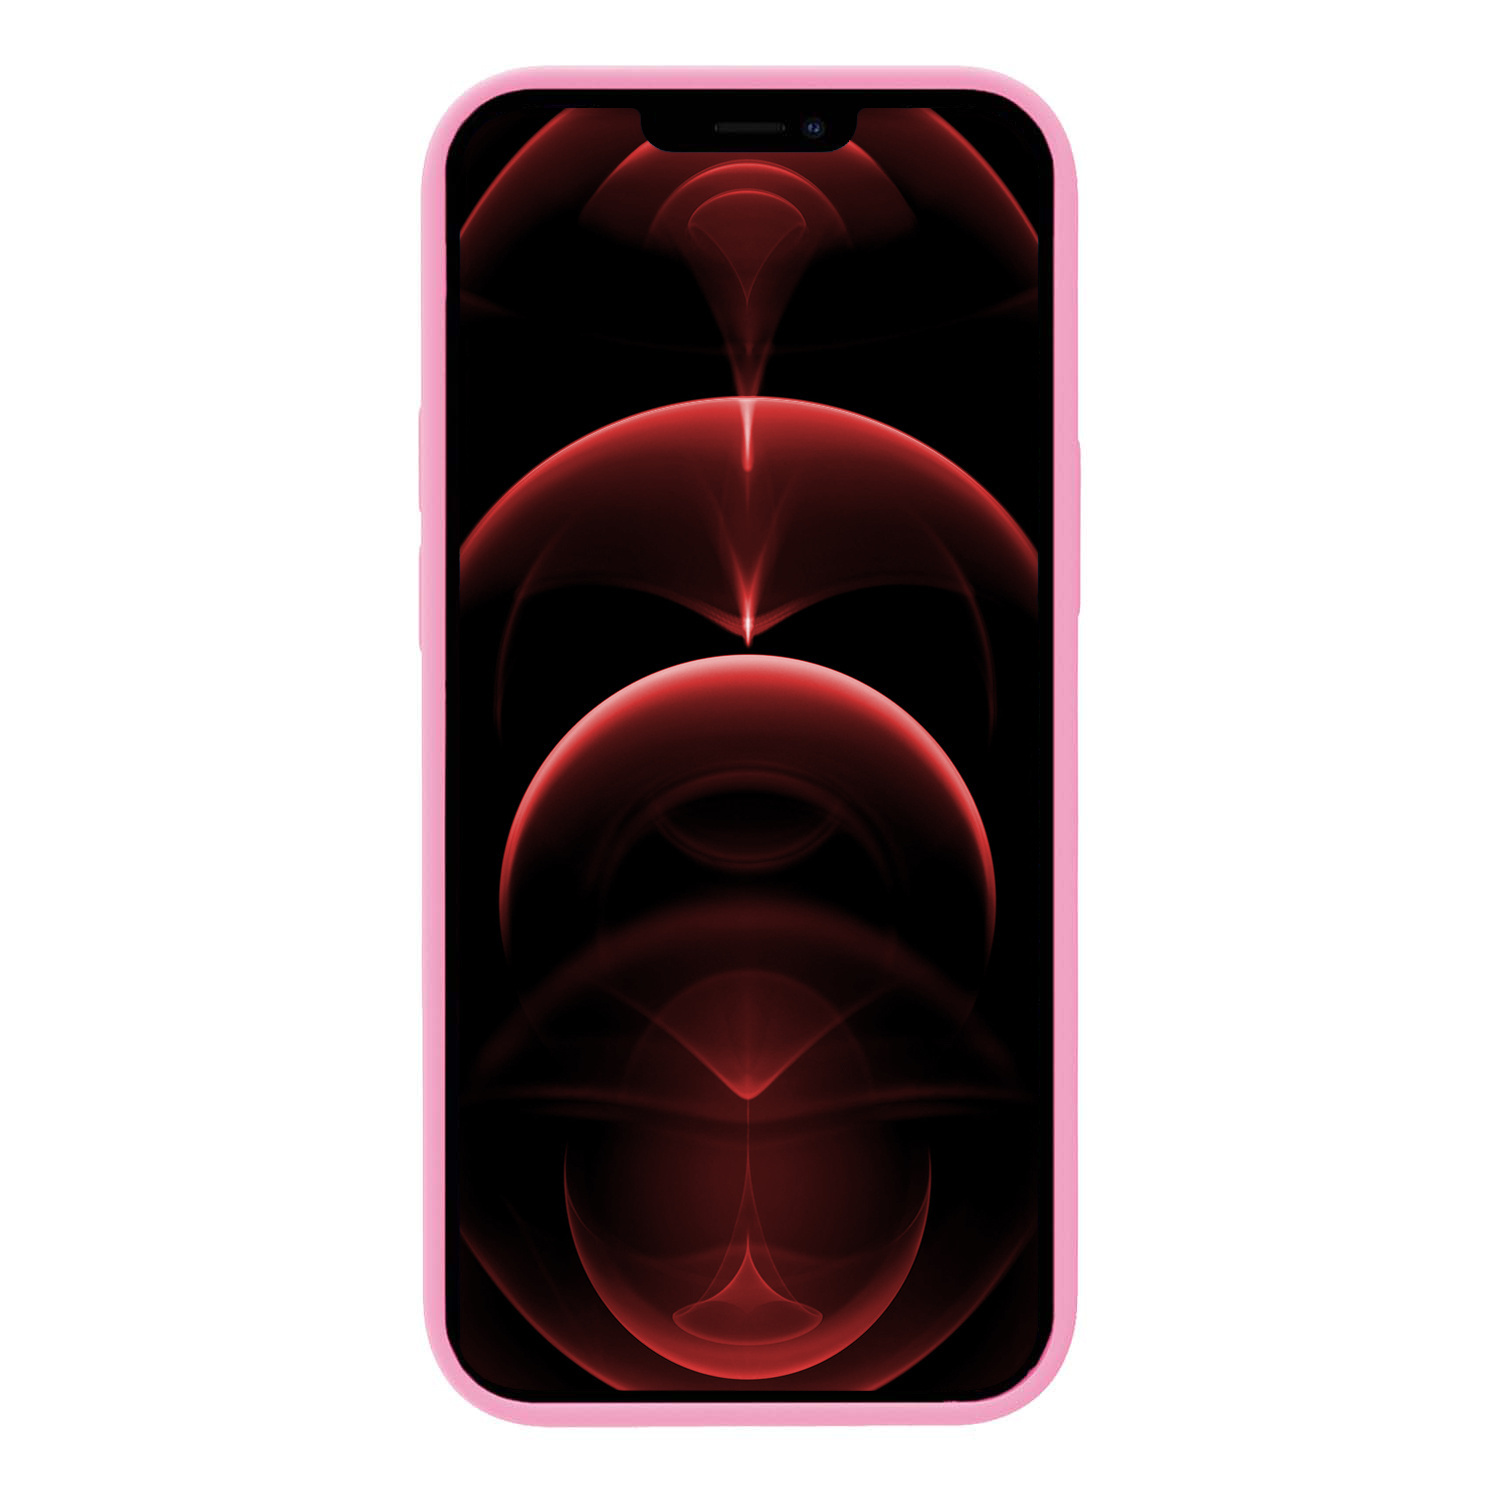 Hoes voor iPhone 14 Plus Hoesje Siliconen Case Back Cover - Hoes voor iPhone 14 Plus Hoes Cover Silicone - Licht Roze - 2X